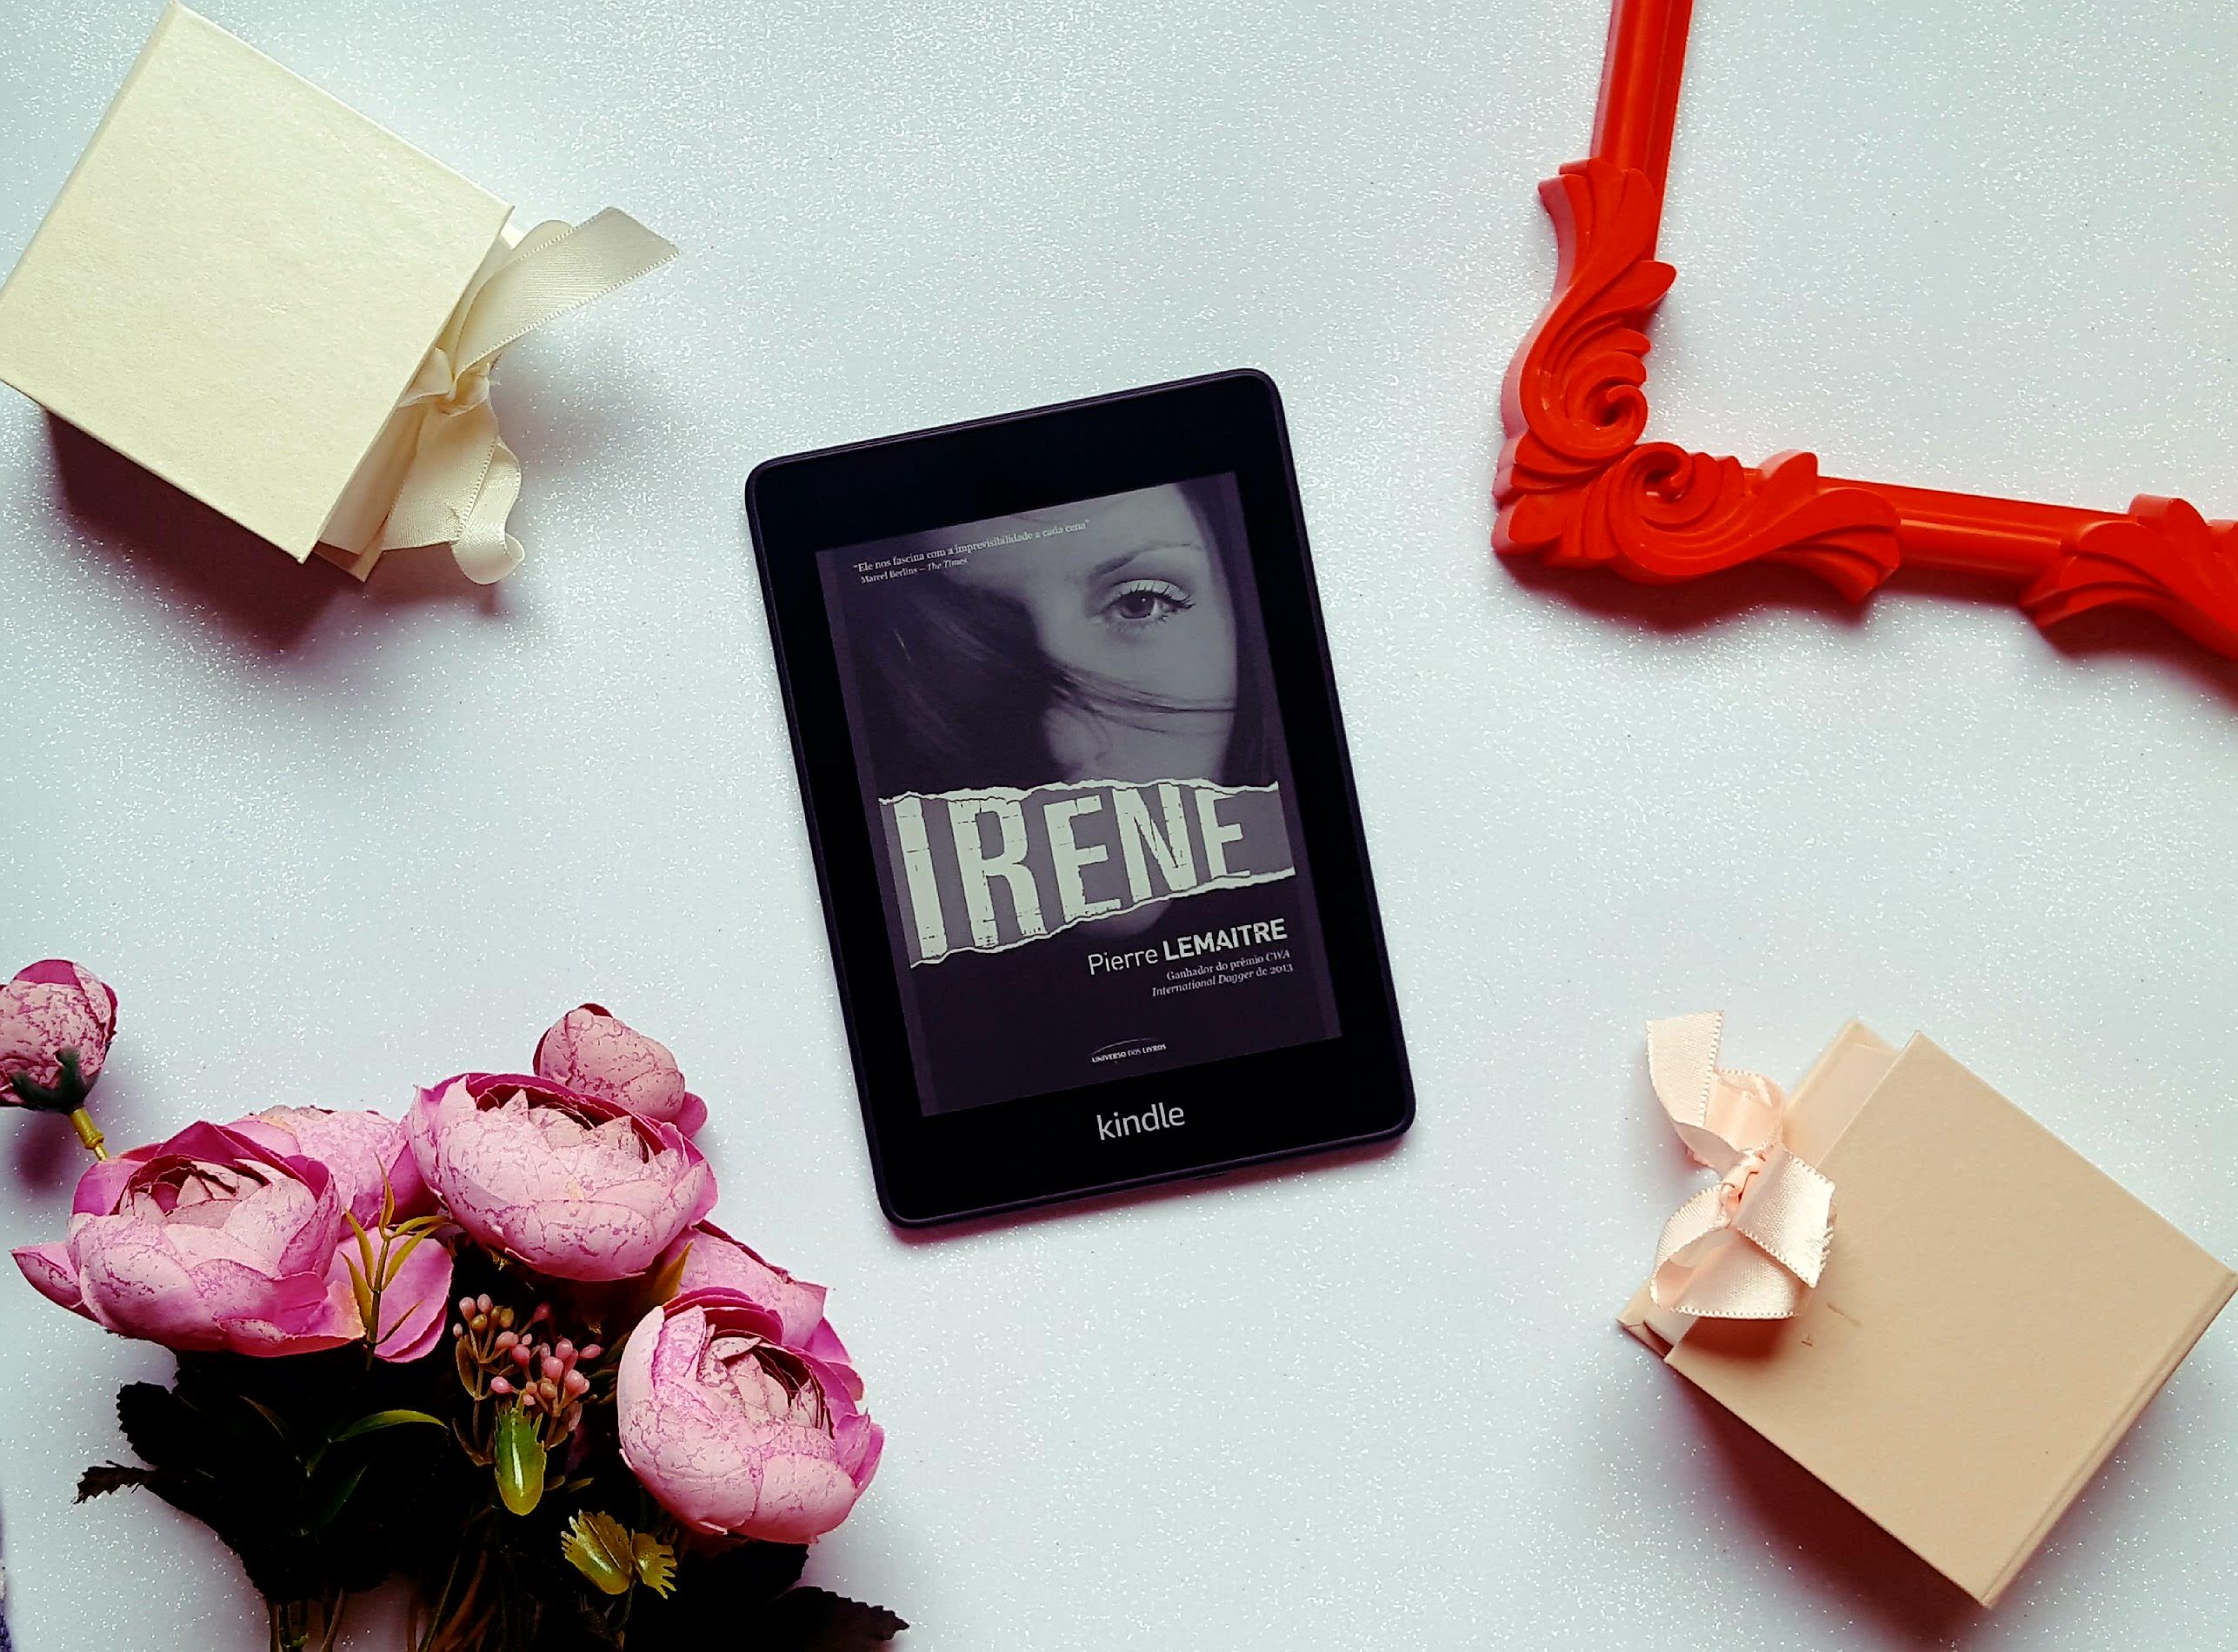 Irene | Pierre Lemaitre